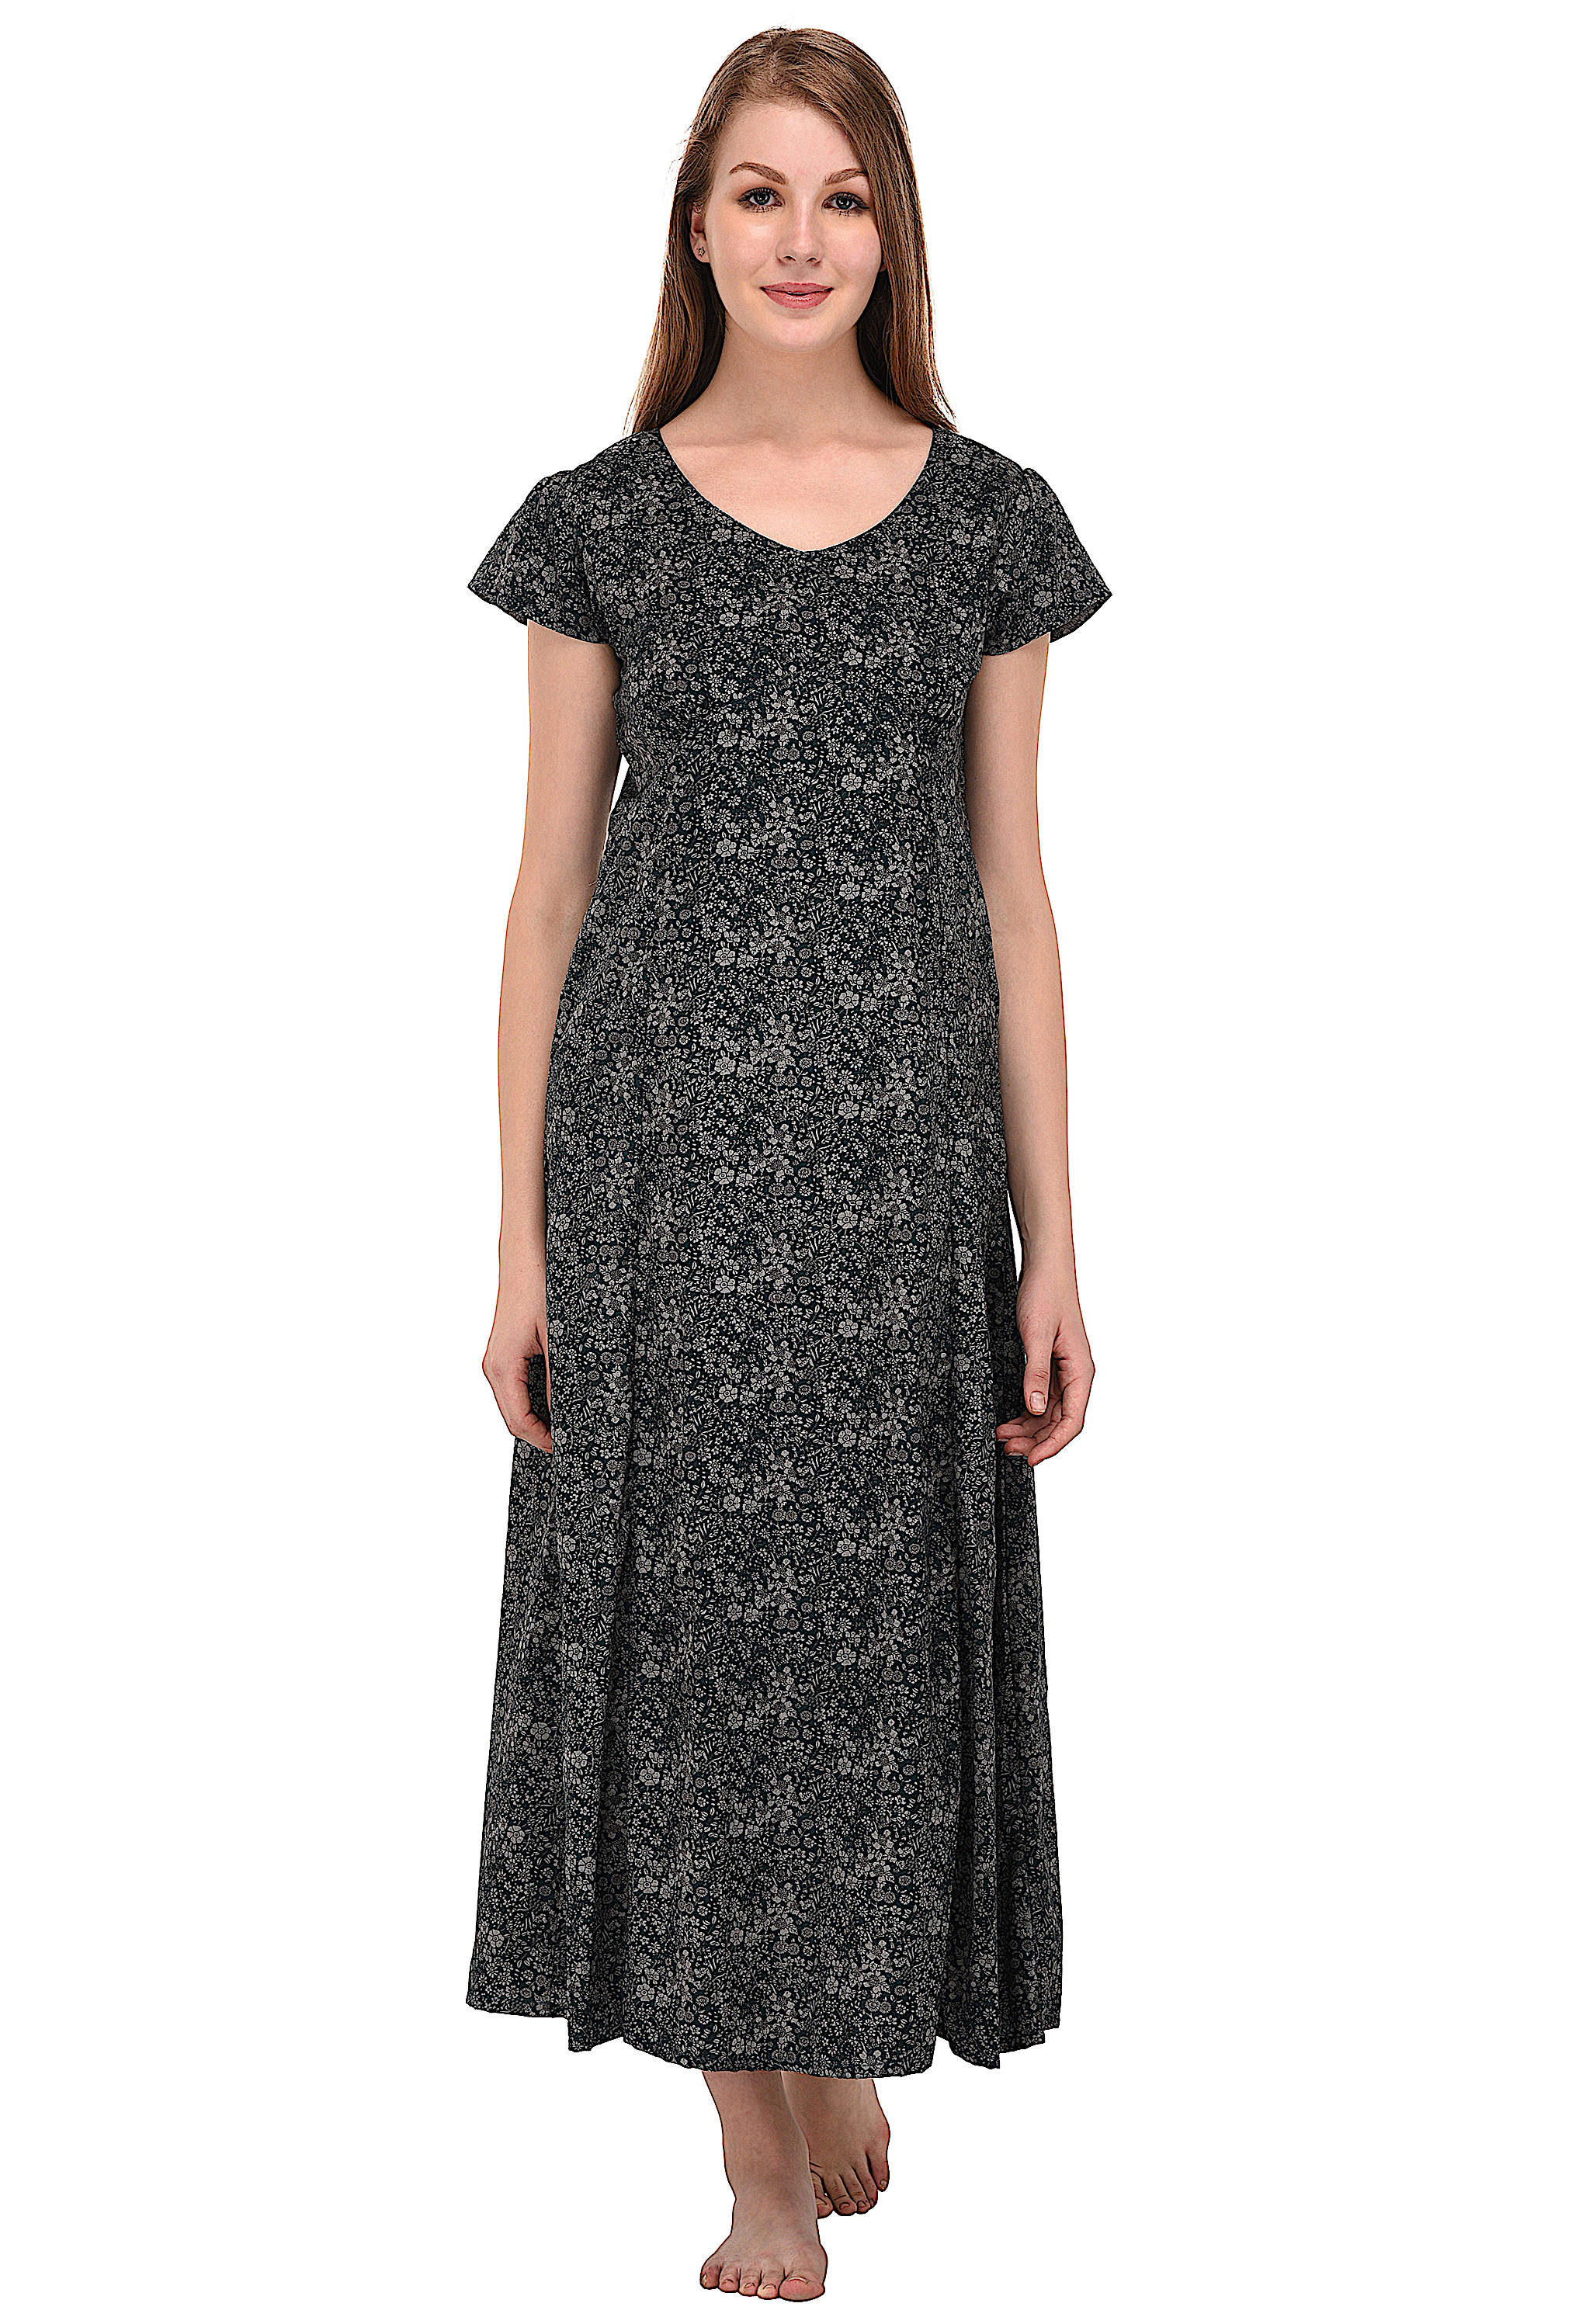 Short Sleeve Printed Pure Cotton Dress | Cotton Lane | COTTON LANE